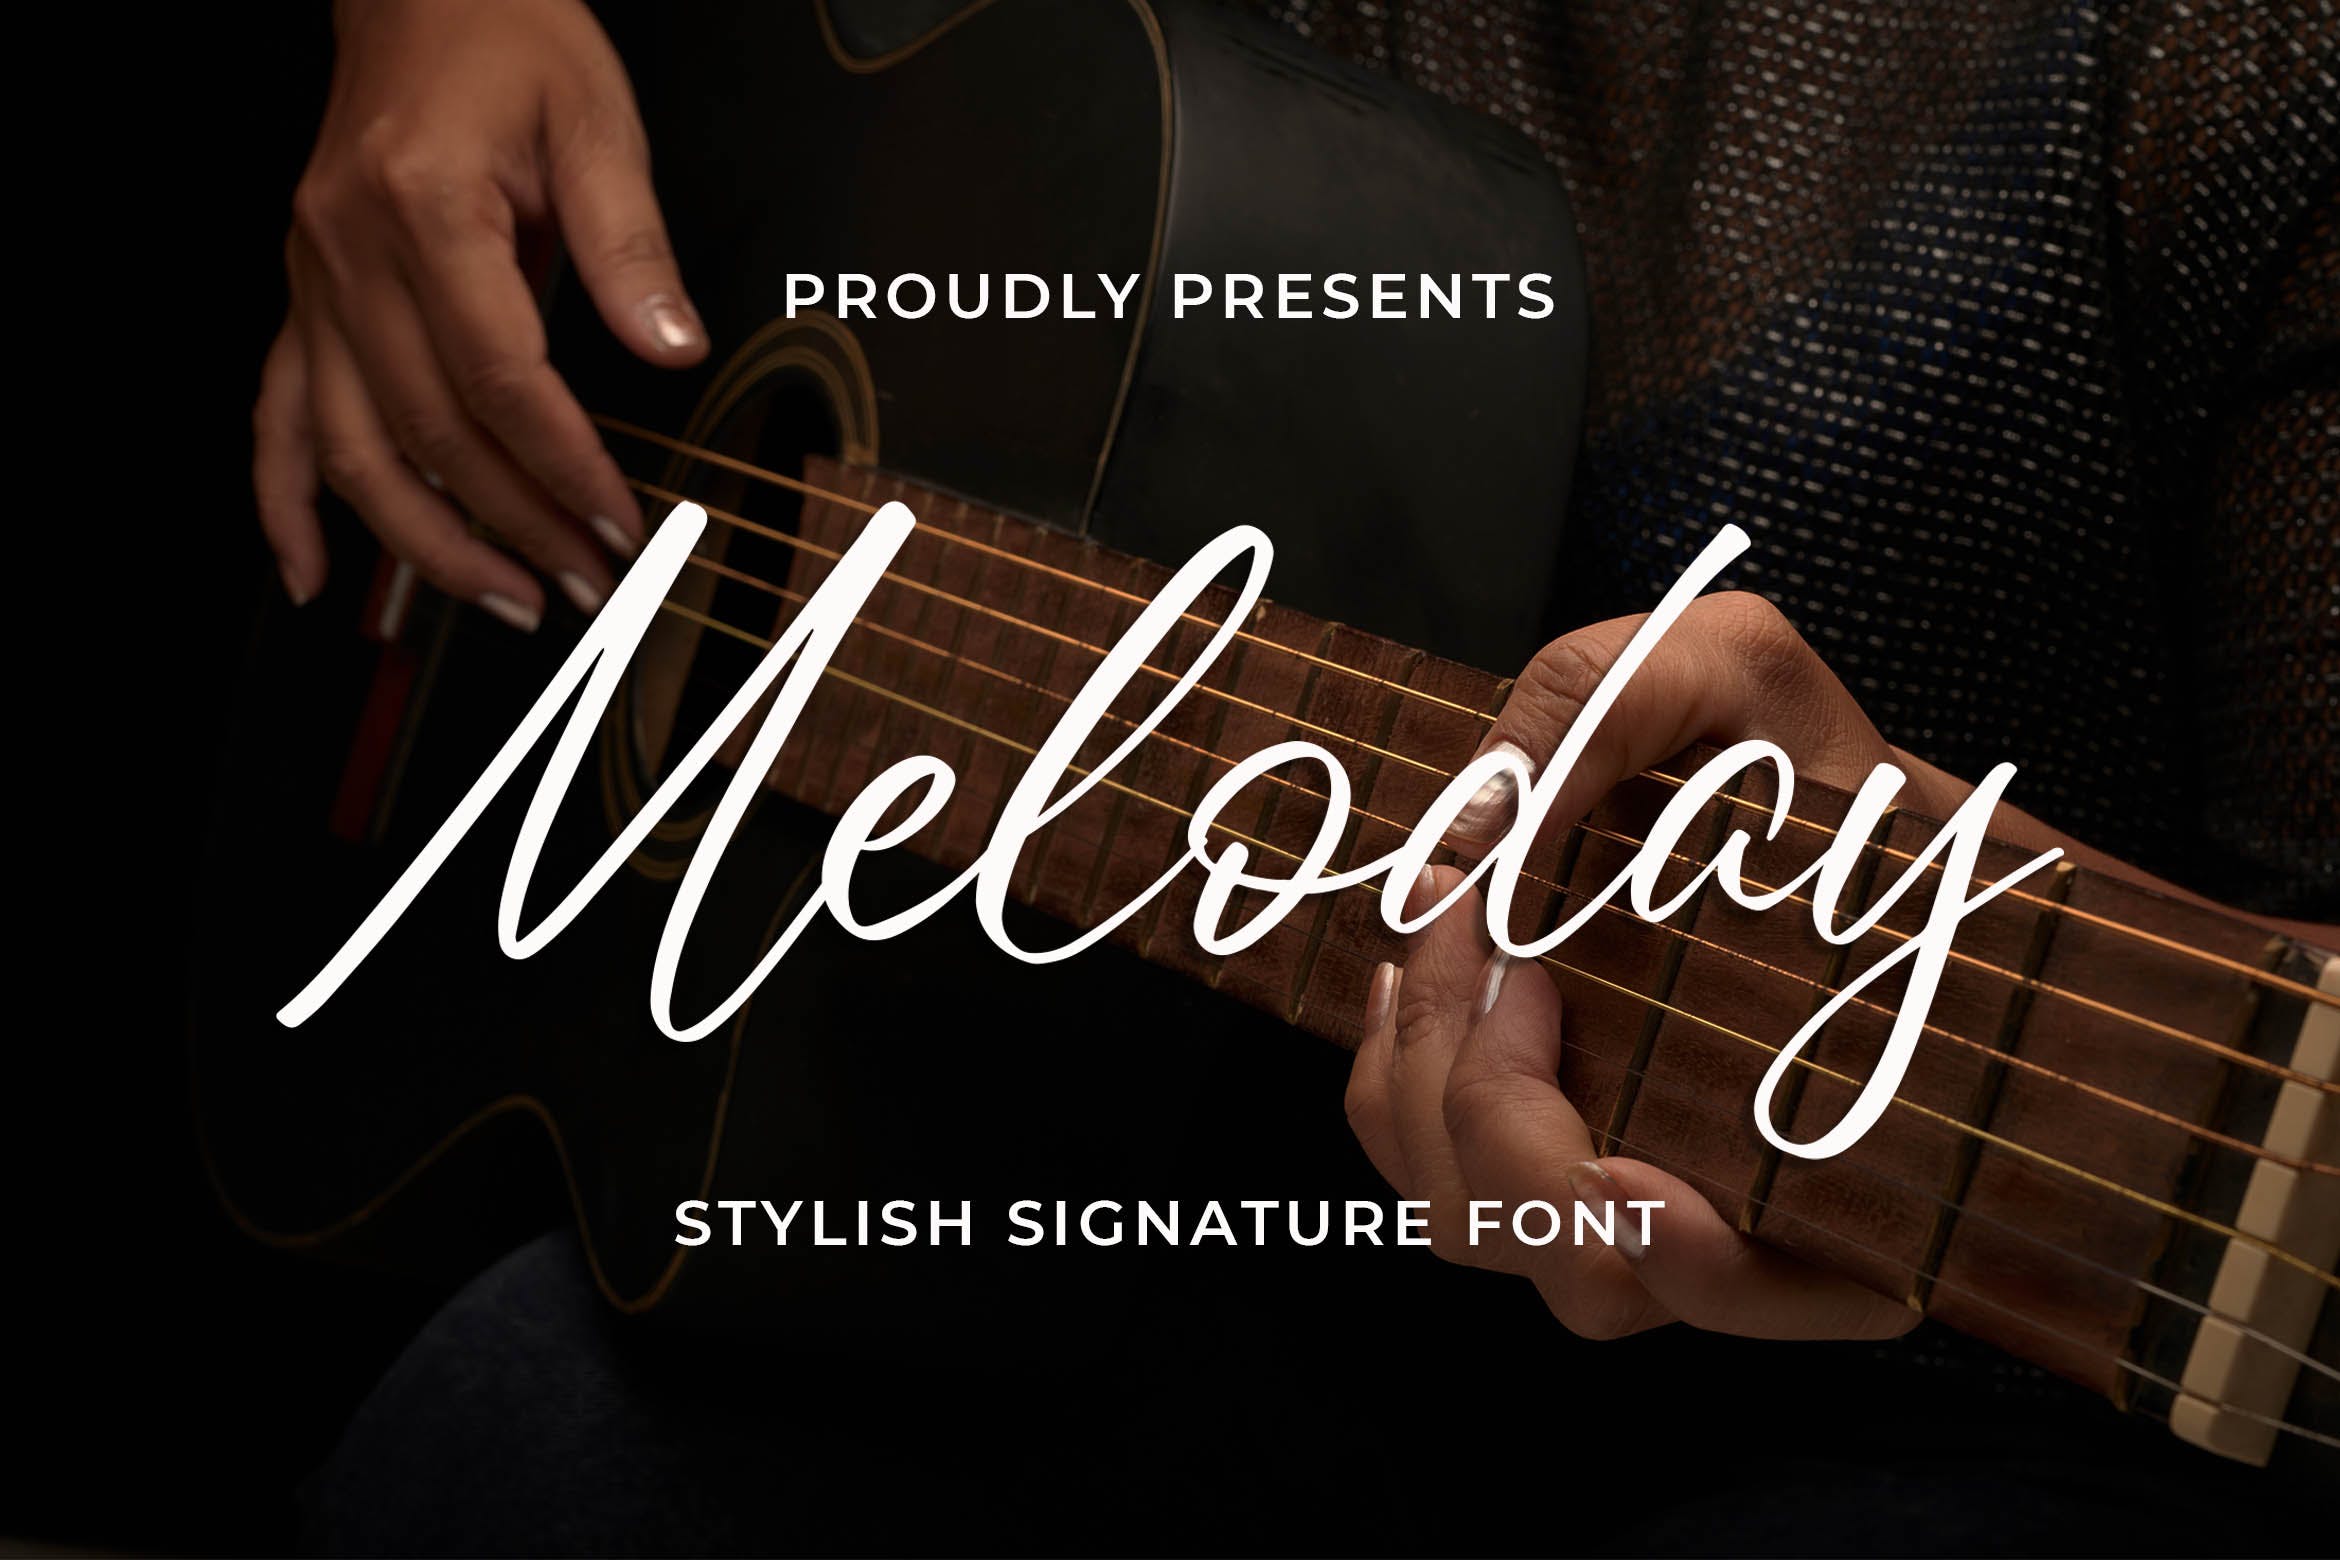 英文时尚签名手写字体蚂蚁素材精选 Meloday – Stylish Signature Font插图